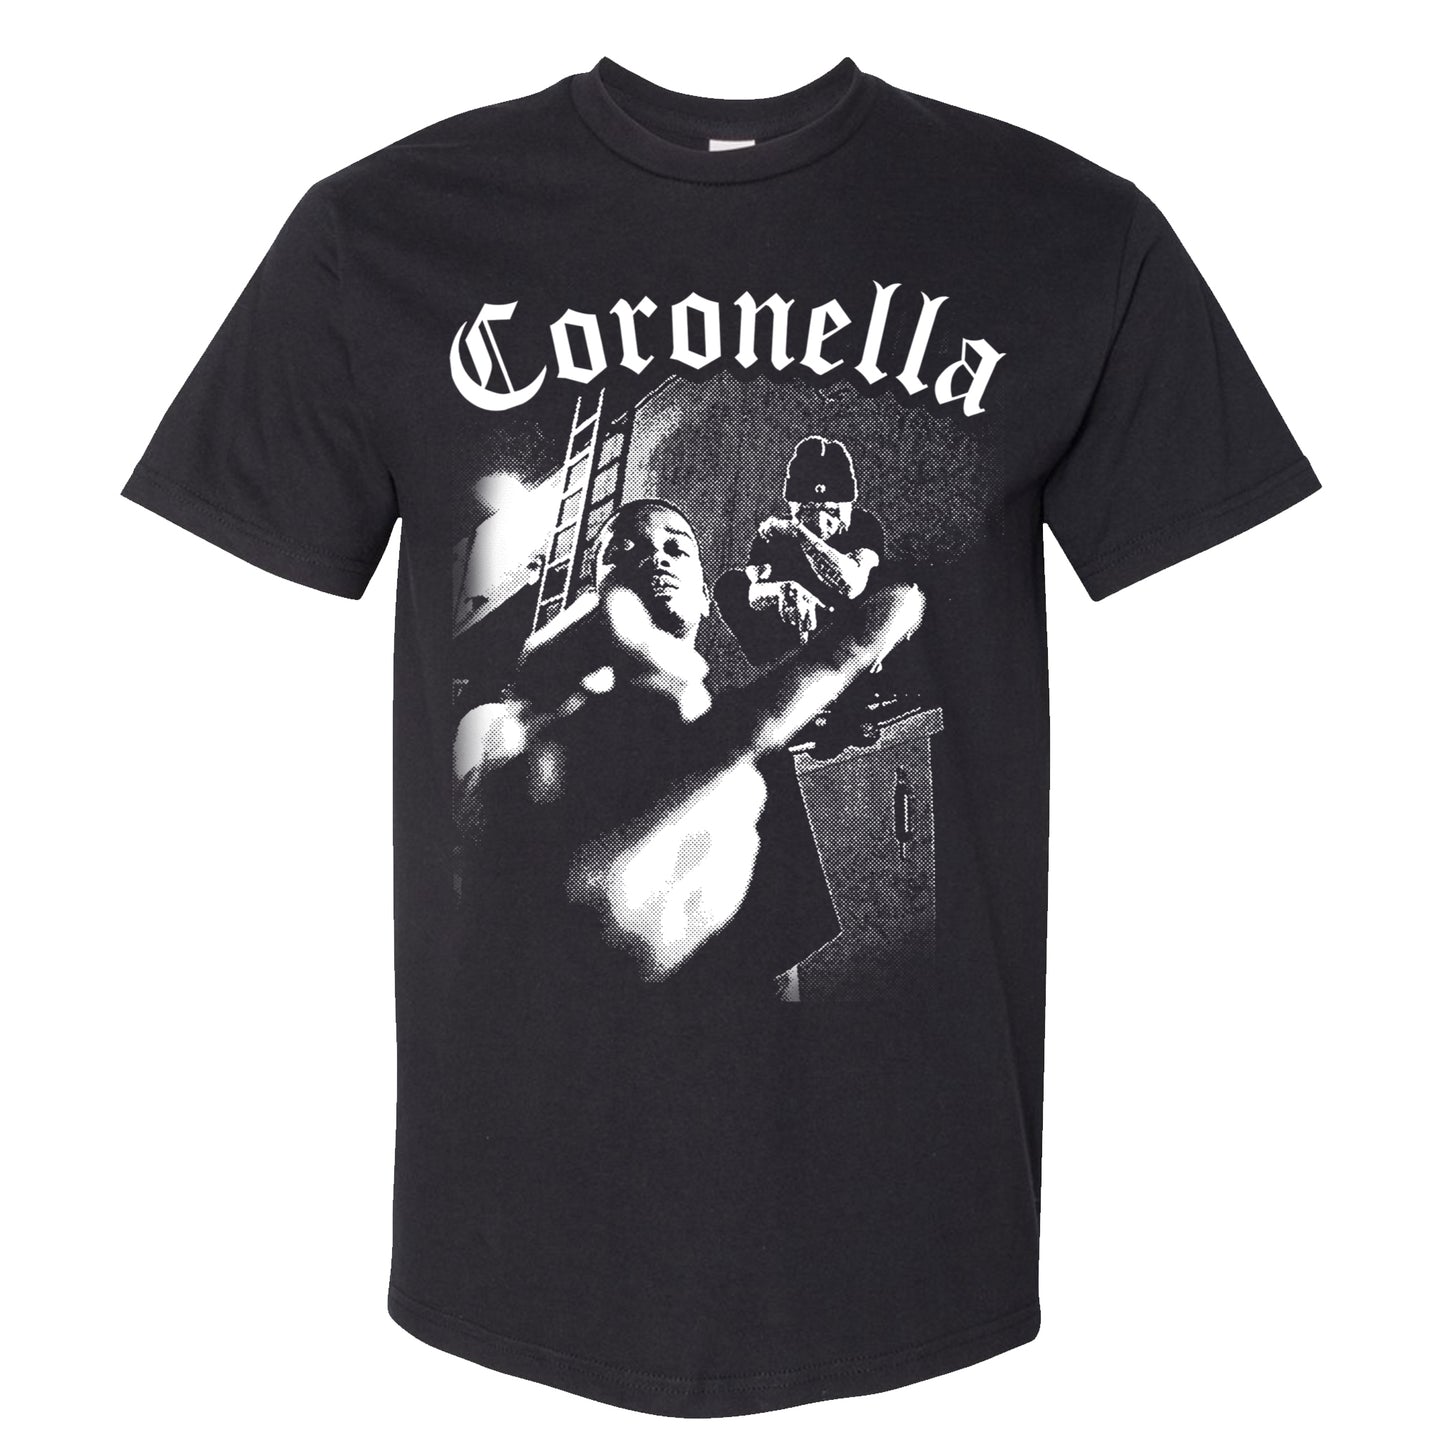 Coronella Album shirt